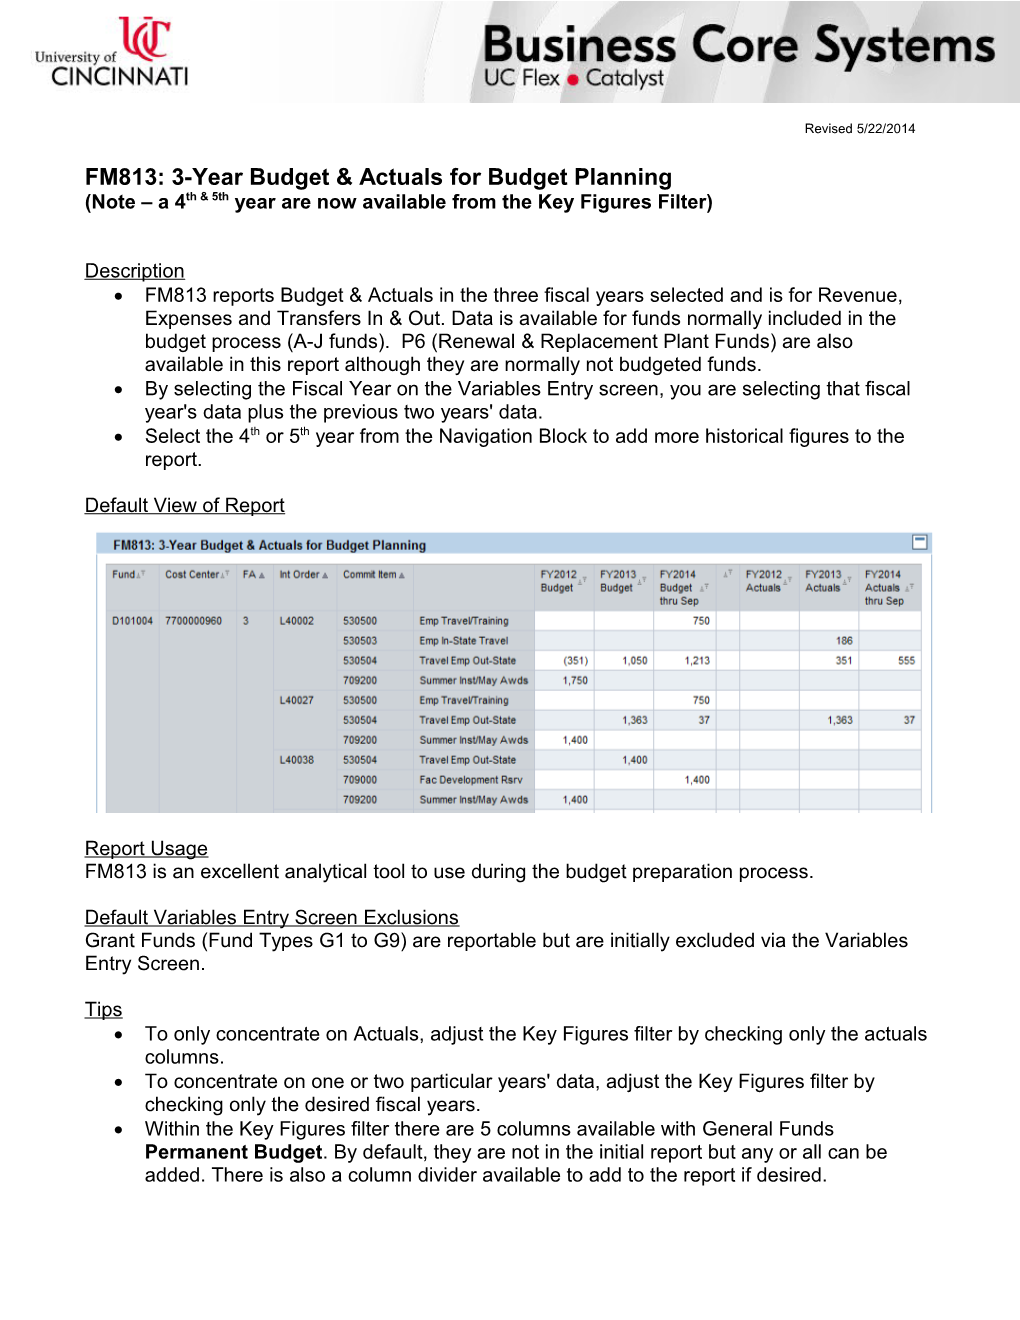 FM805: Period Budget Vs s3